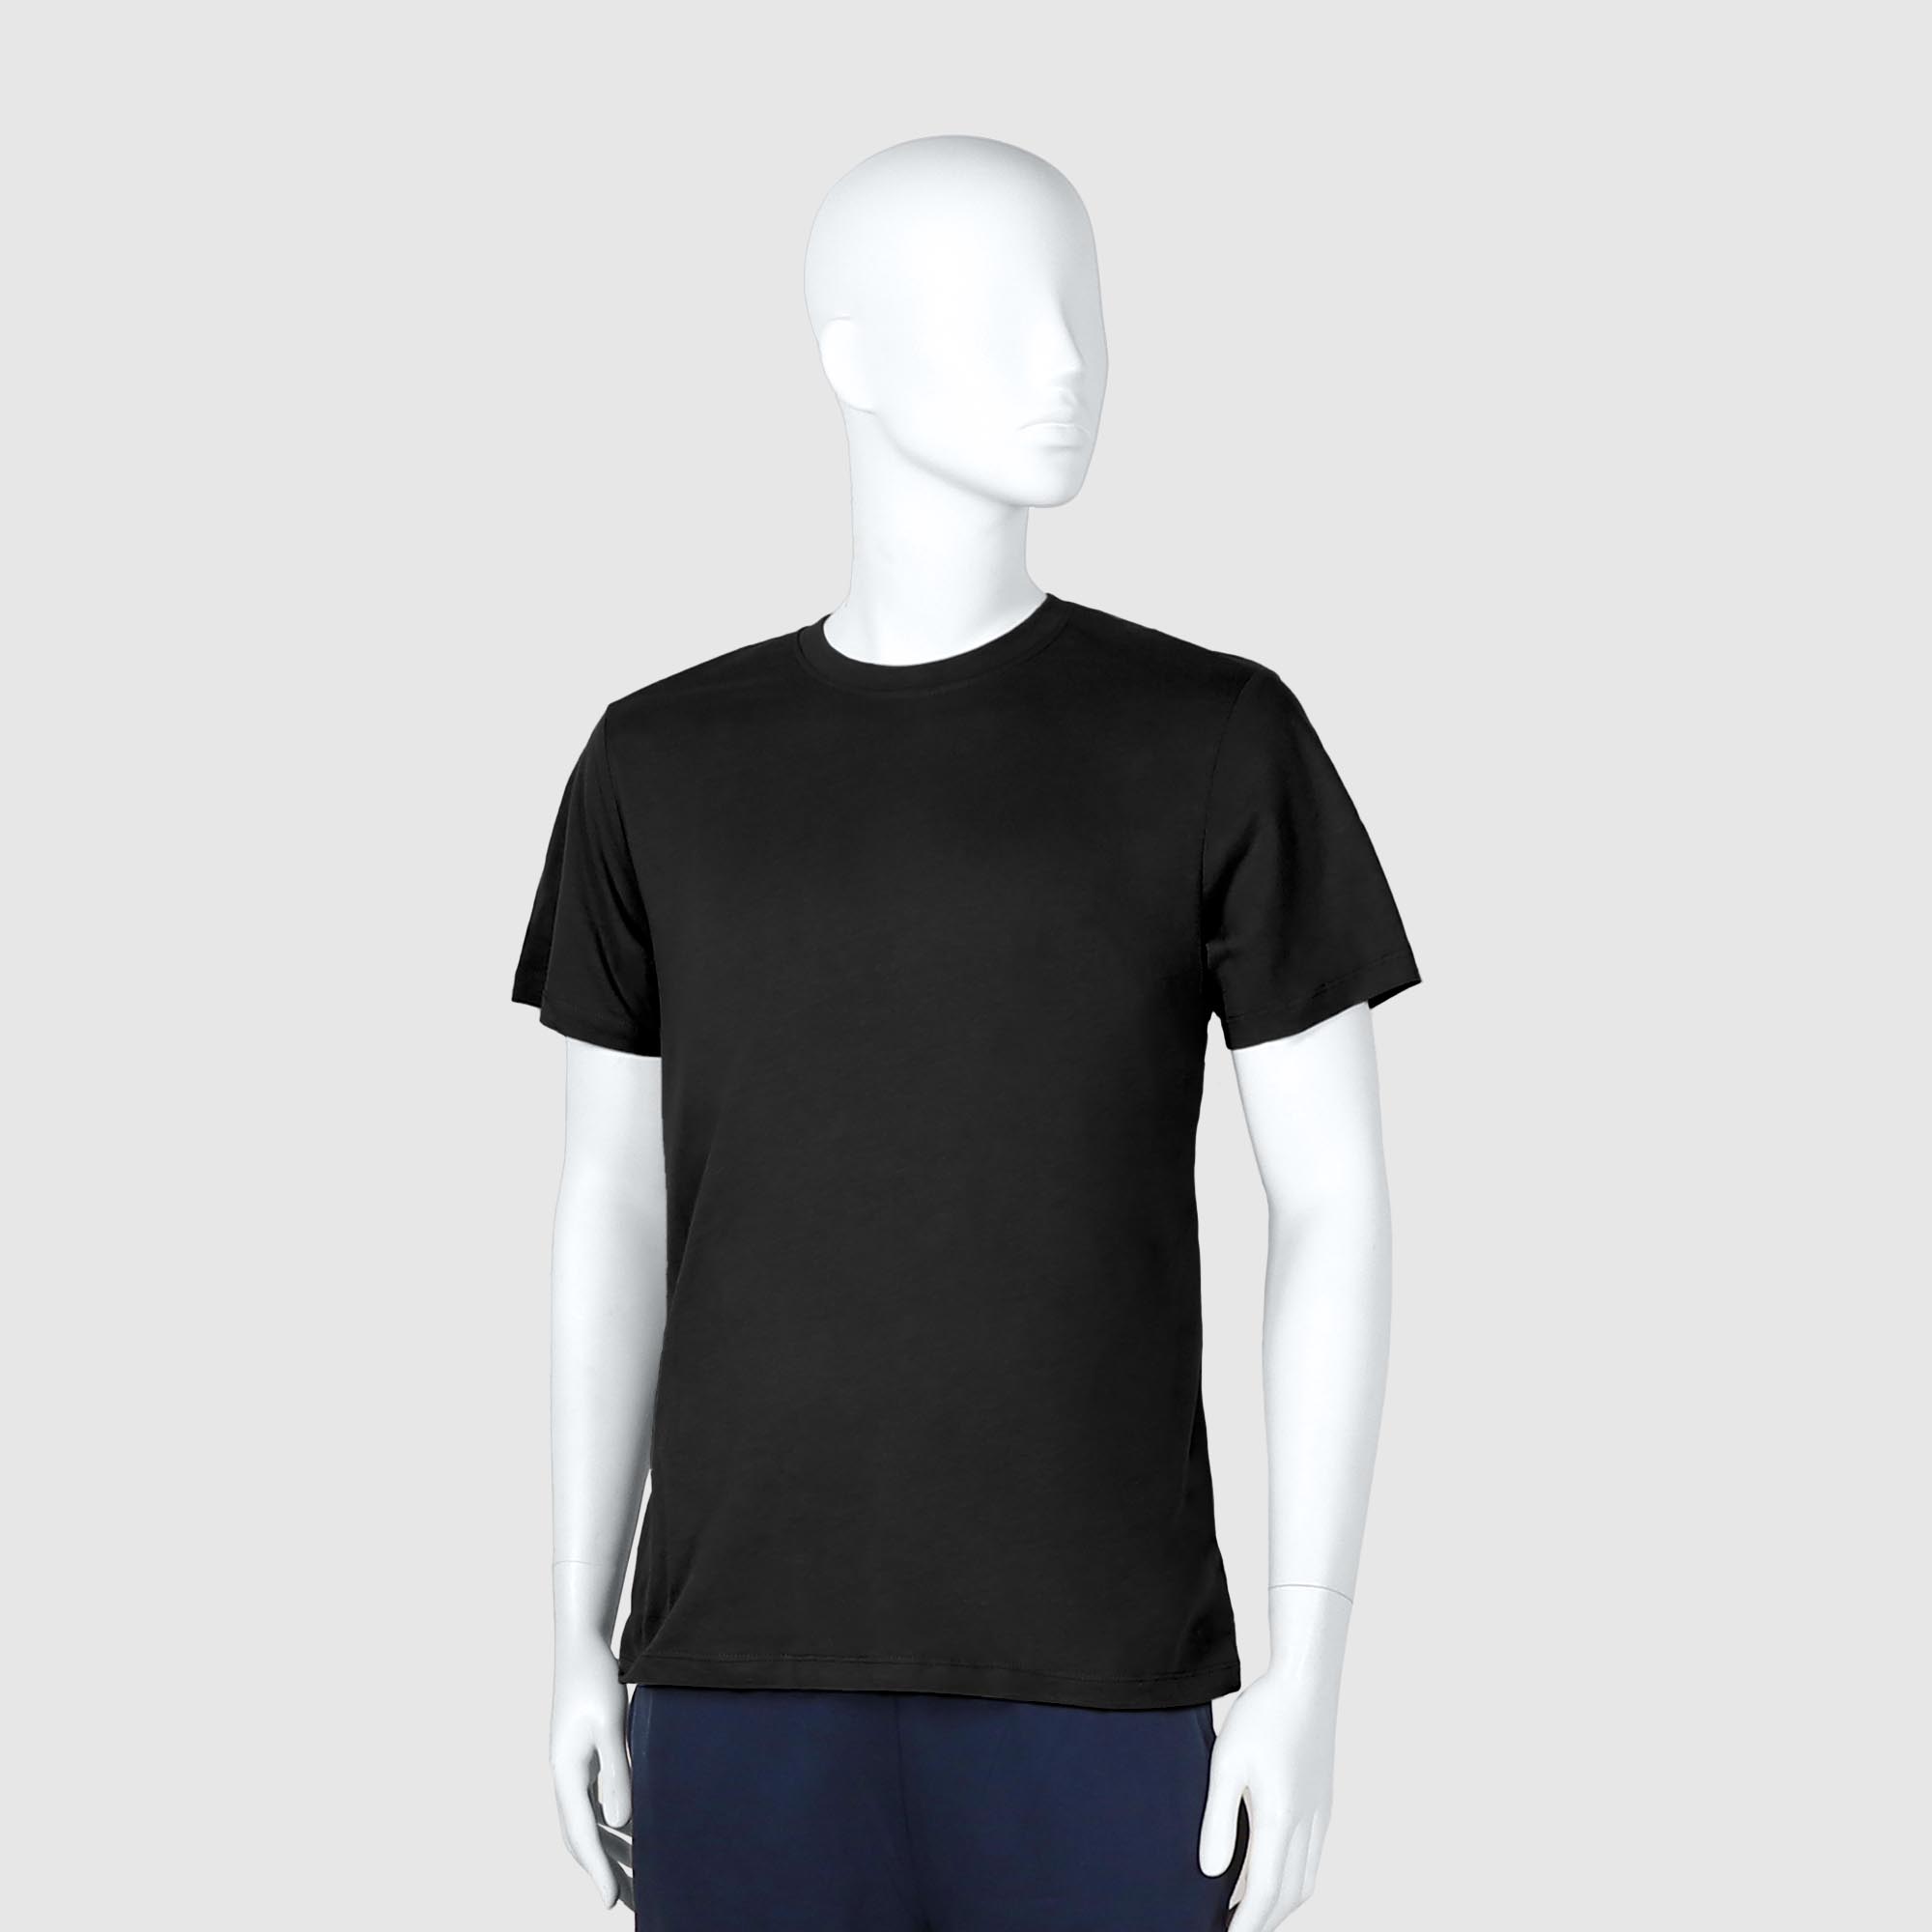 Мужская футболка Diva Teks чёрная (DTD-01), цвет чёрный, размер 52-54